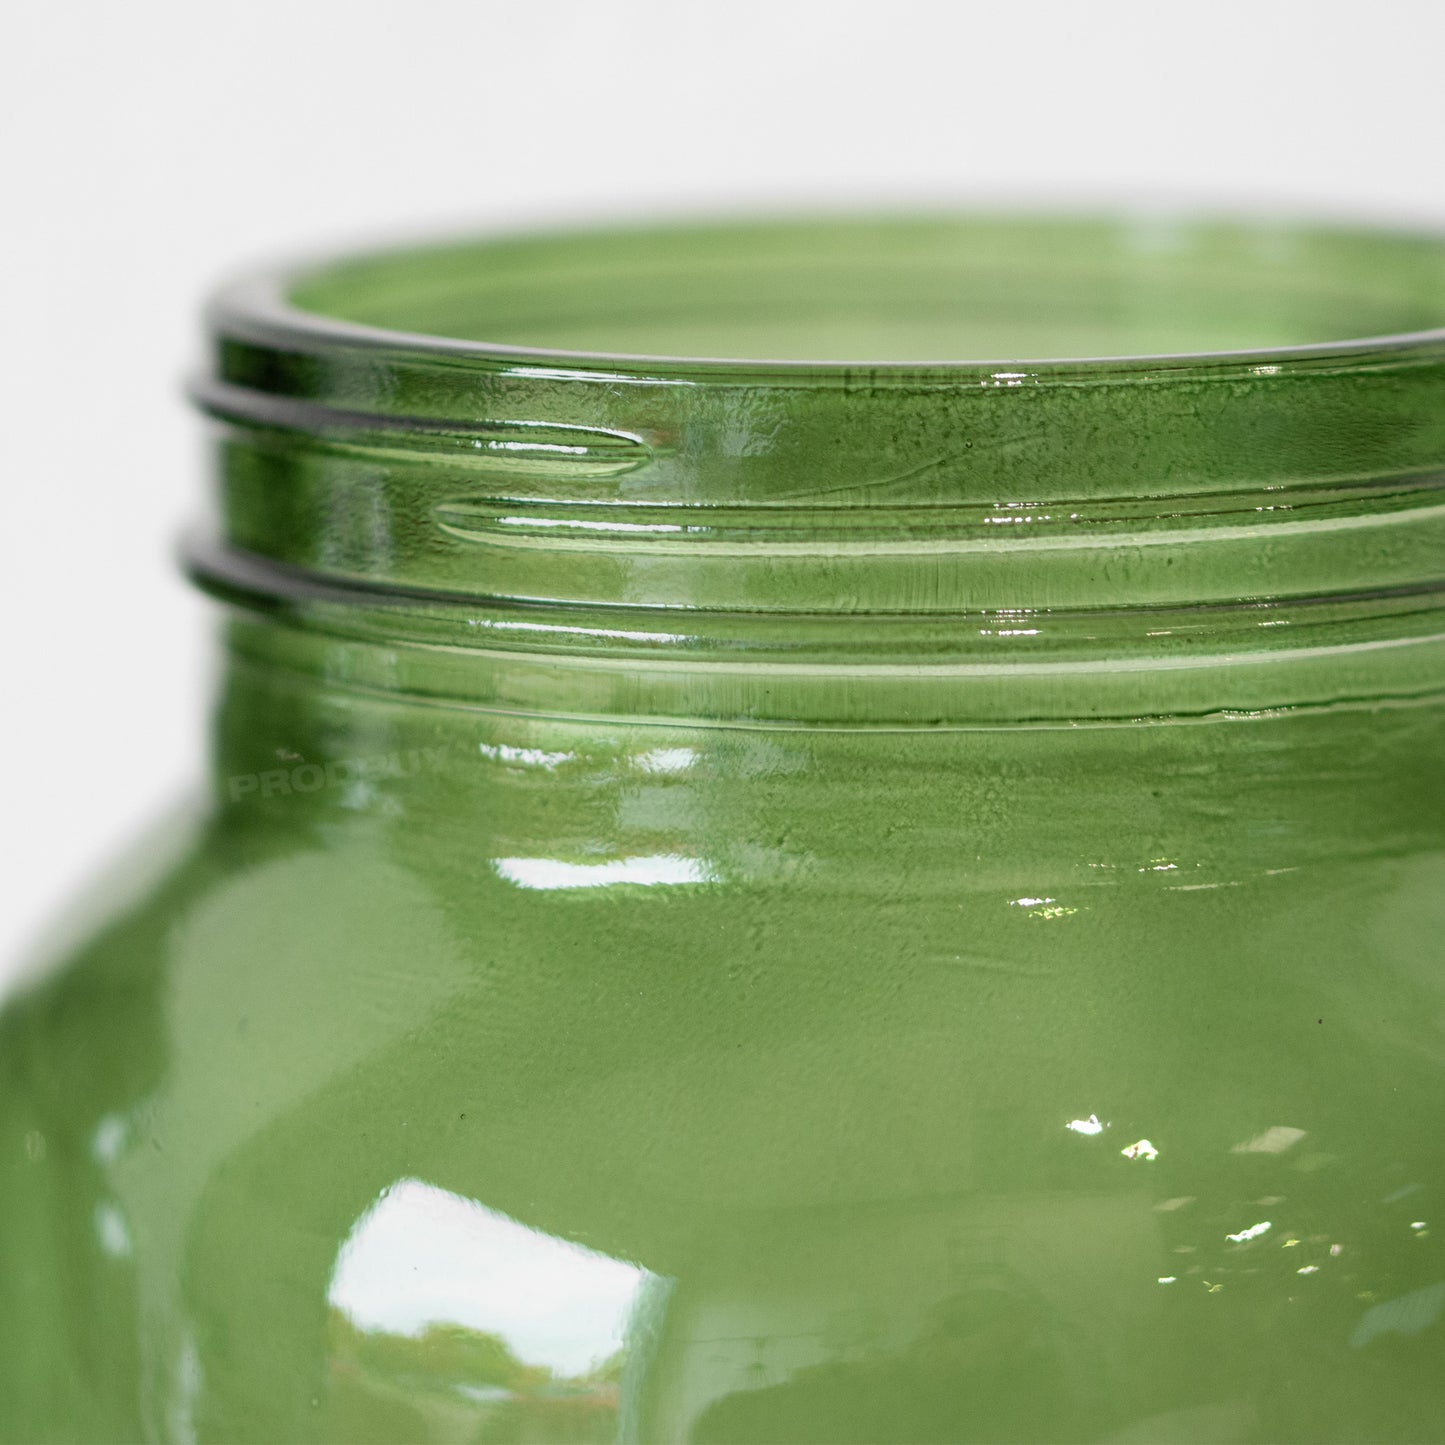 Set of 3 Green Glass 'Tea Coffee Sugar' Storage Jars